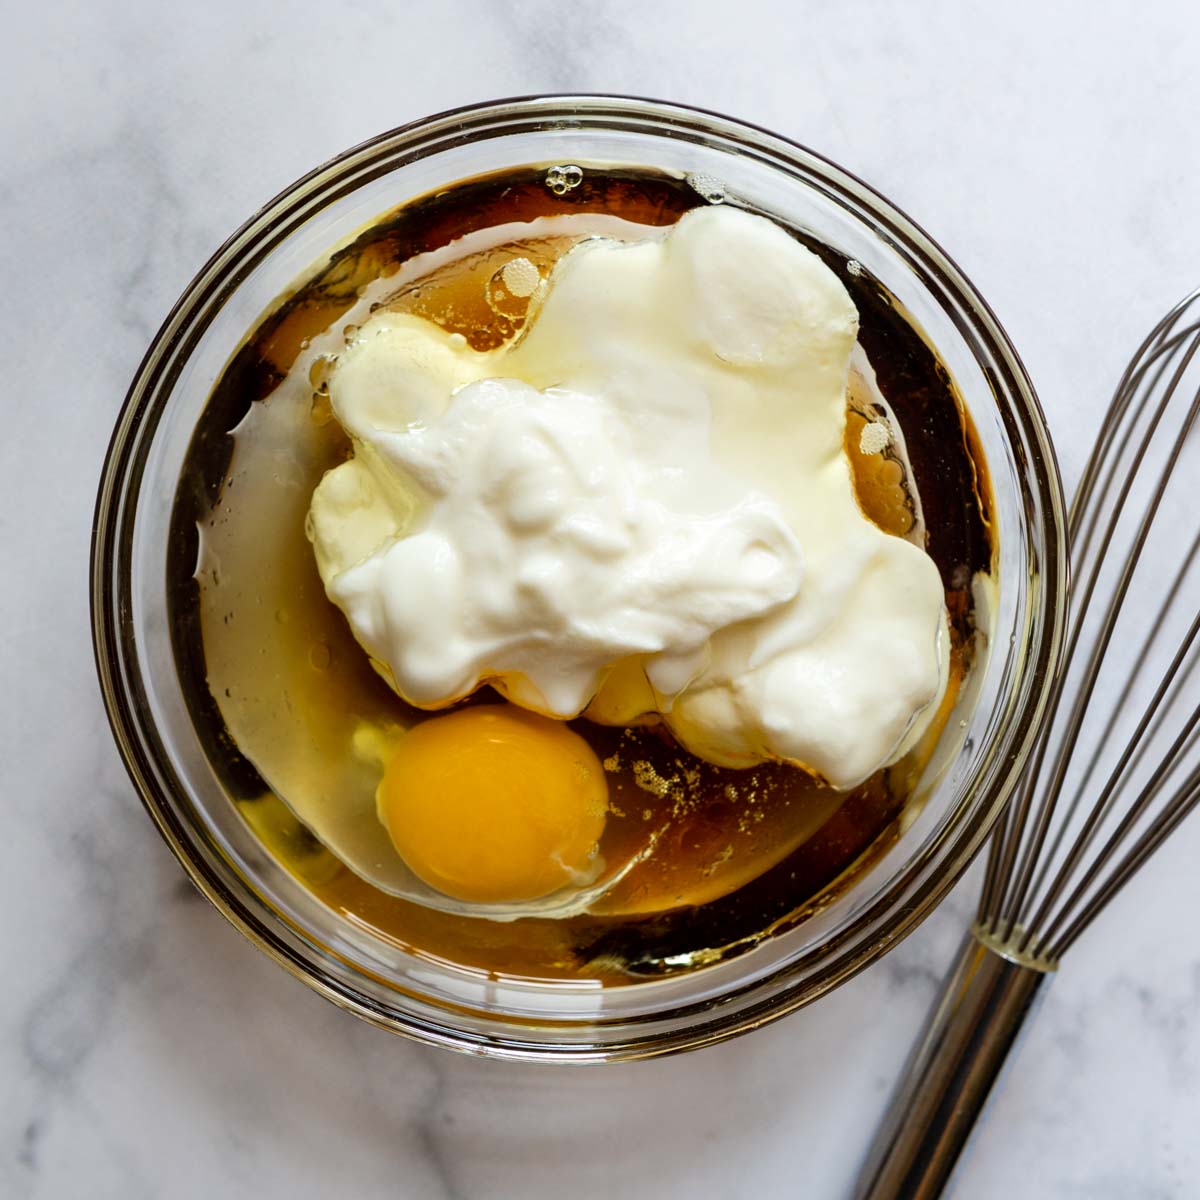 egg, yogurt, oil, and honey in a bowl.